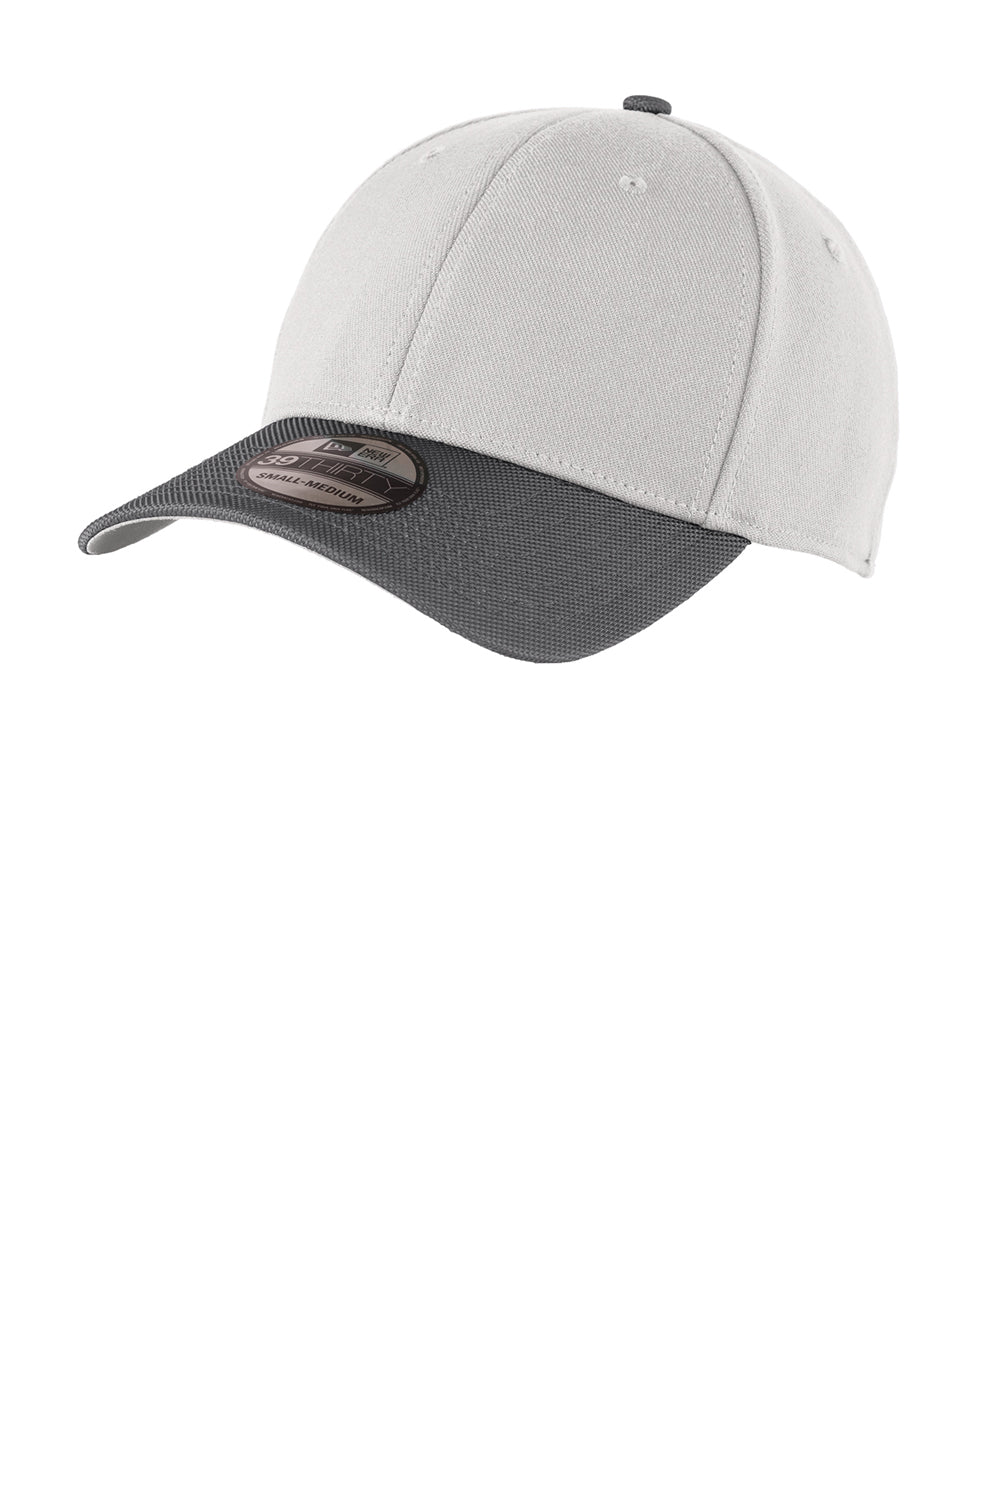 New Era NE701 Mens Stretch Fit Hat Grey/Charcoal Grey Front